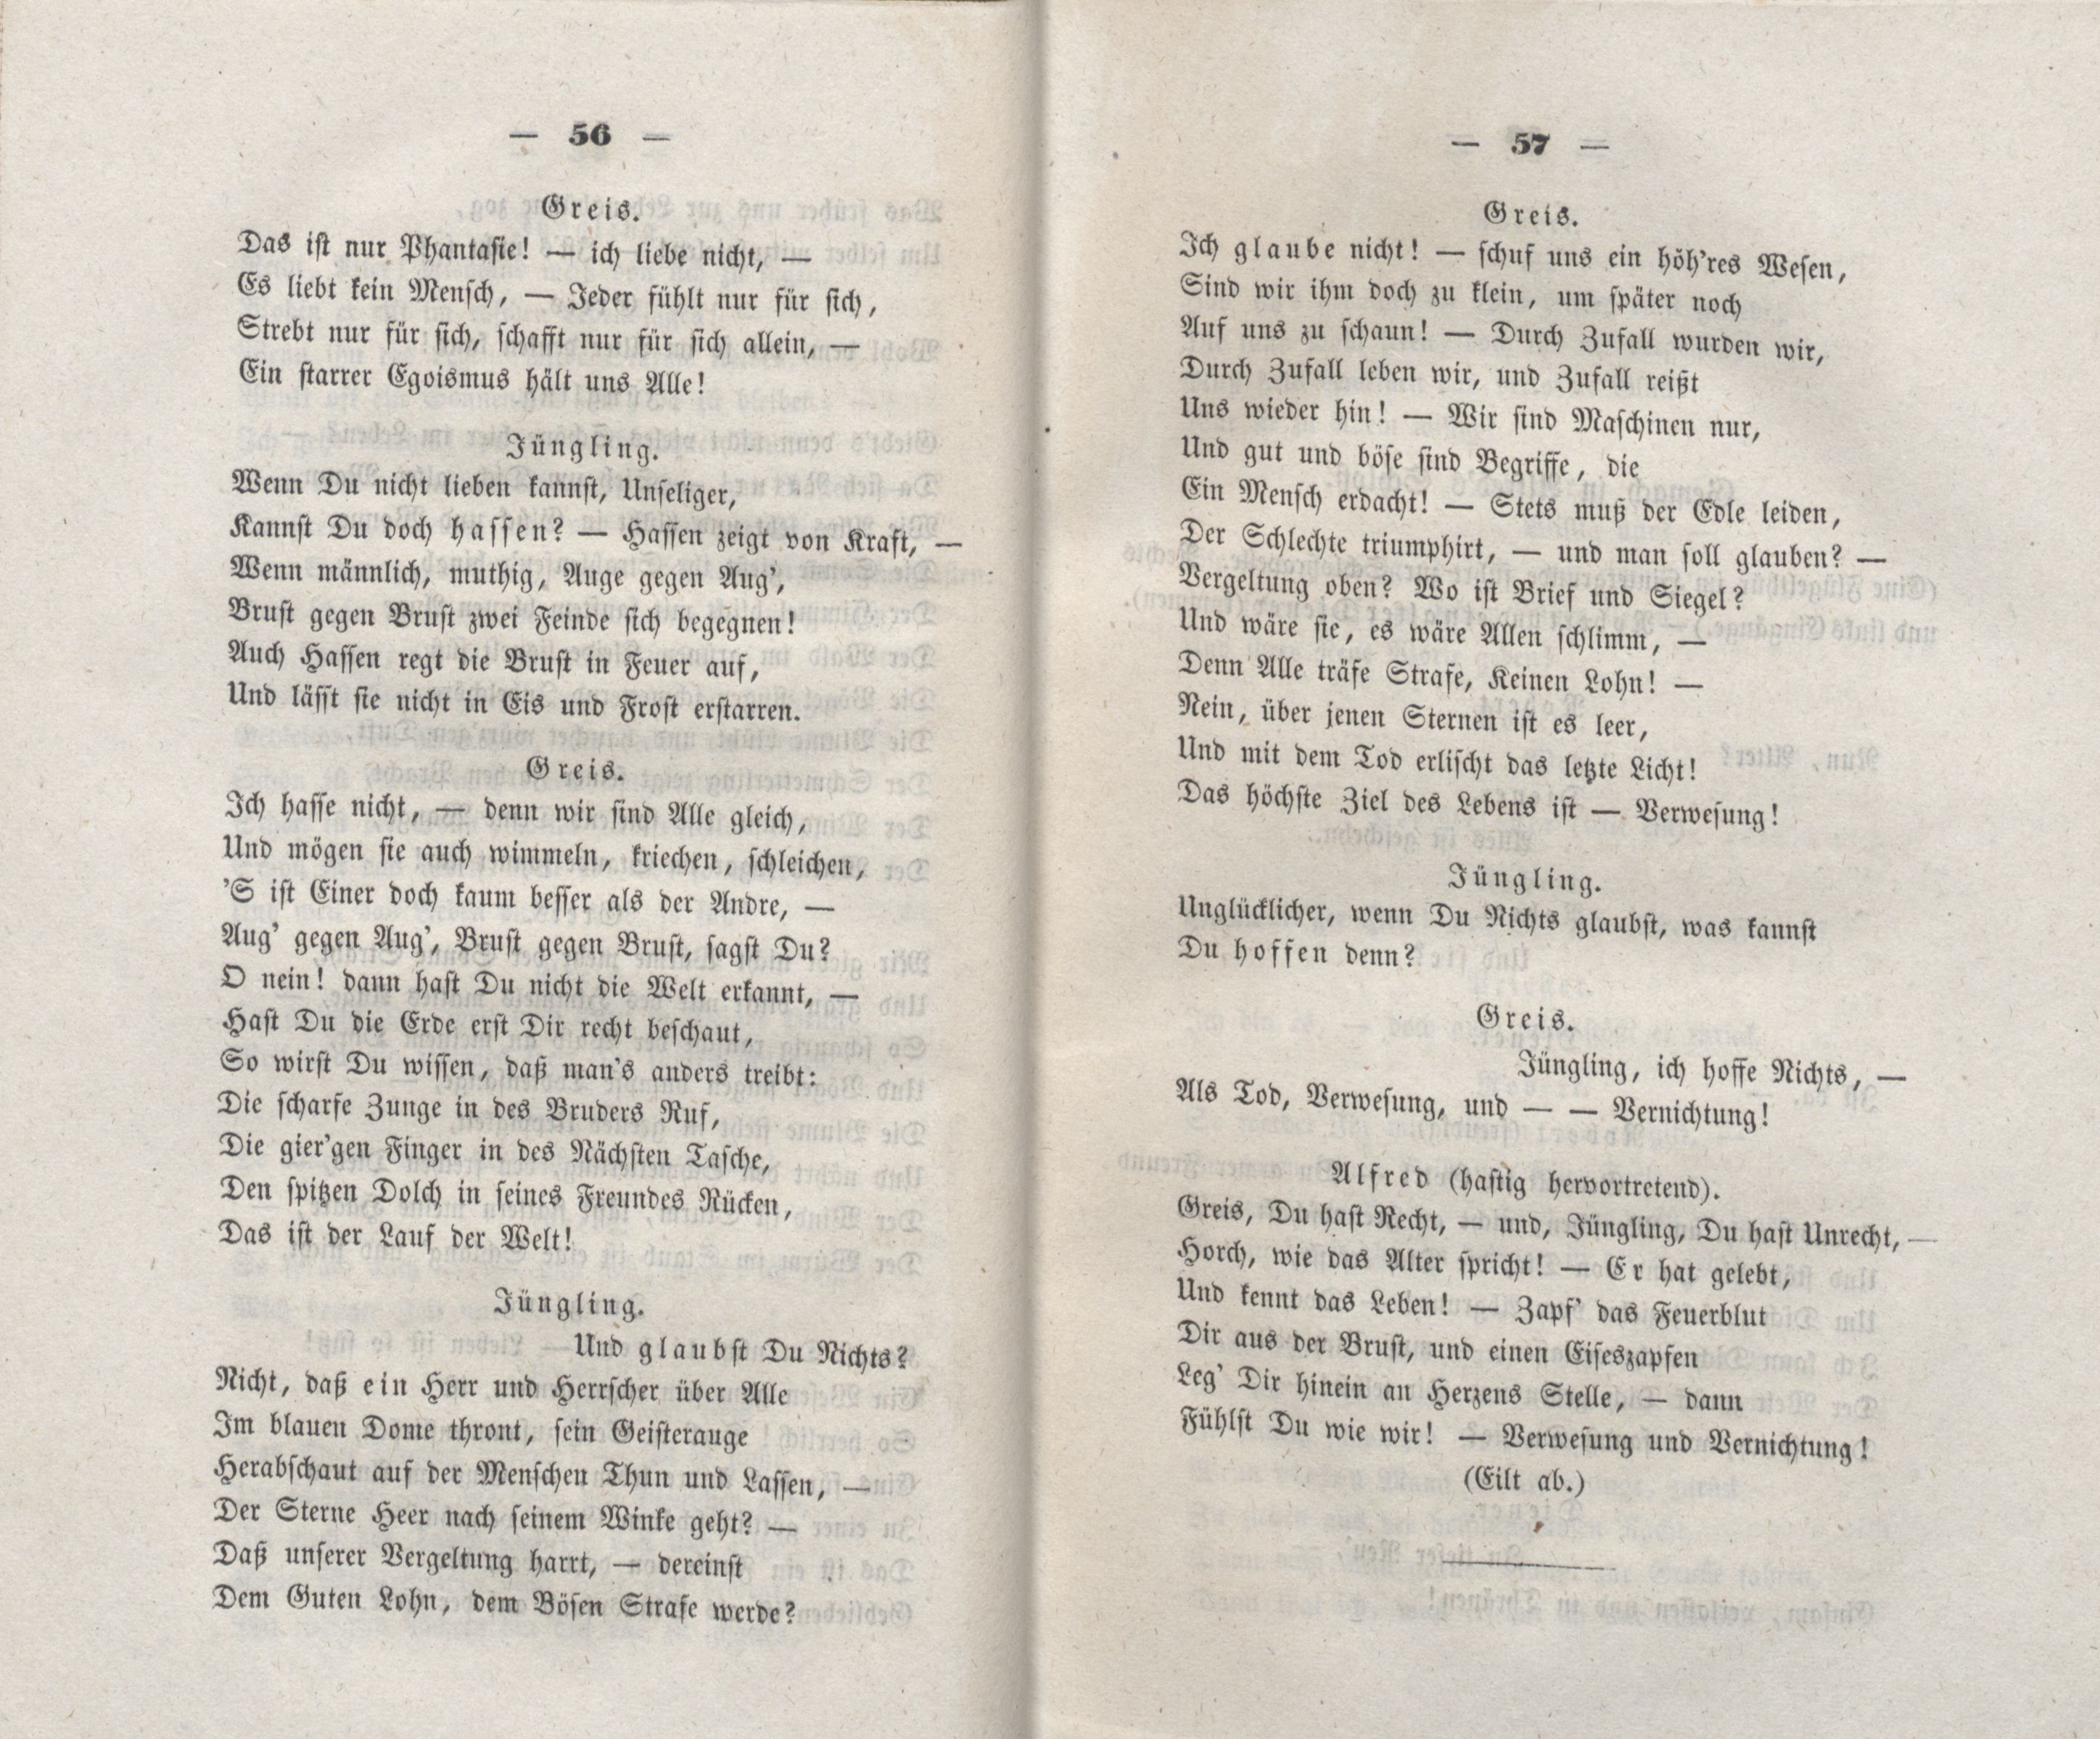 Glaube, Liebe, Hoffnung (1848) | 7. (56-57) Main body of text